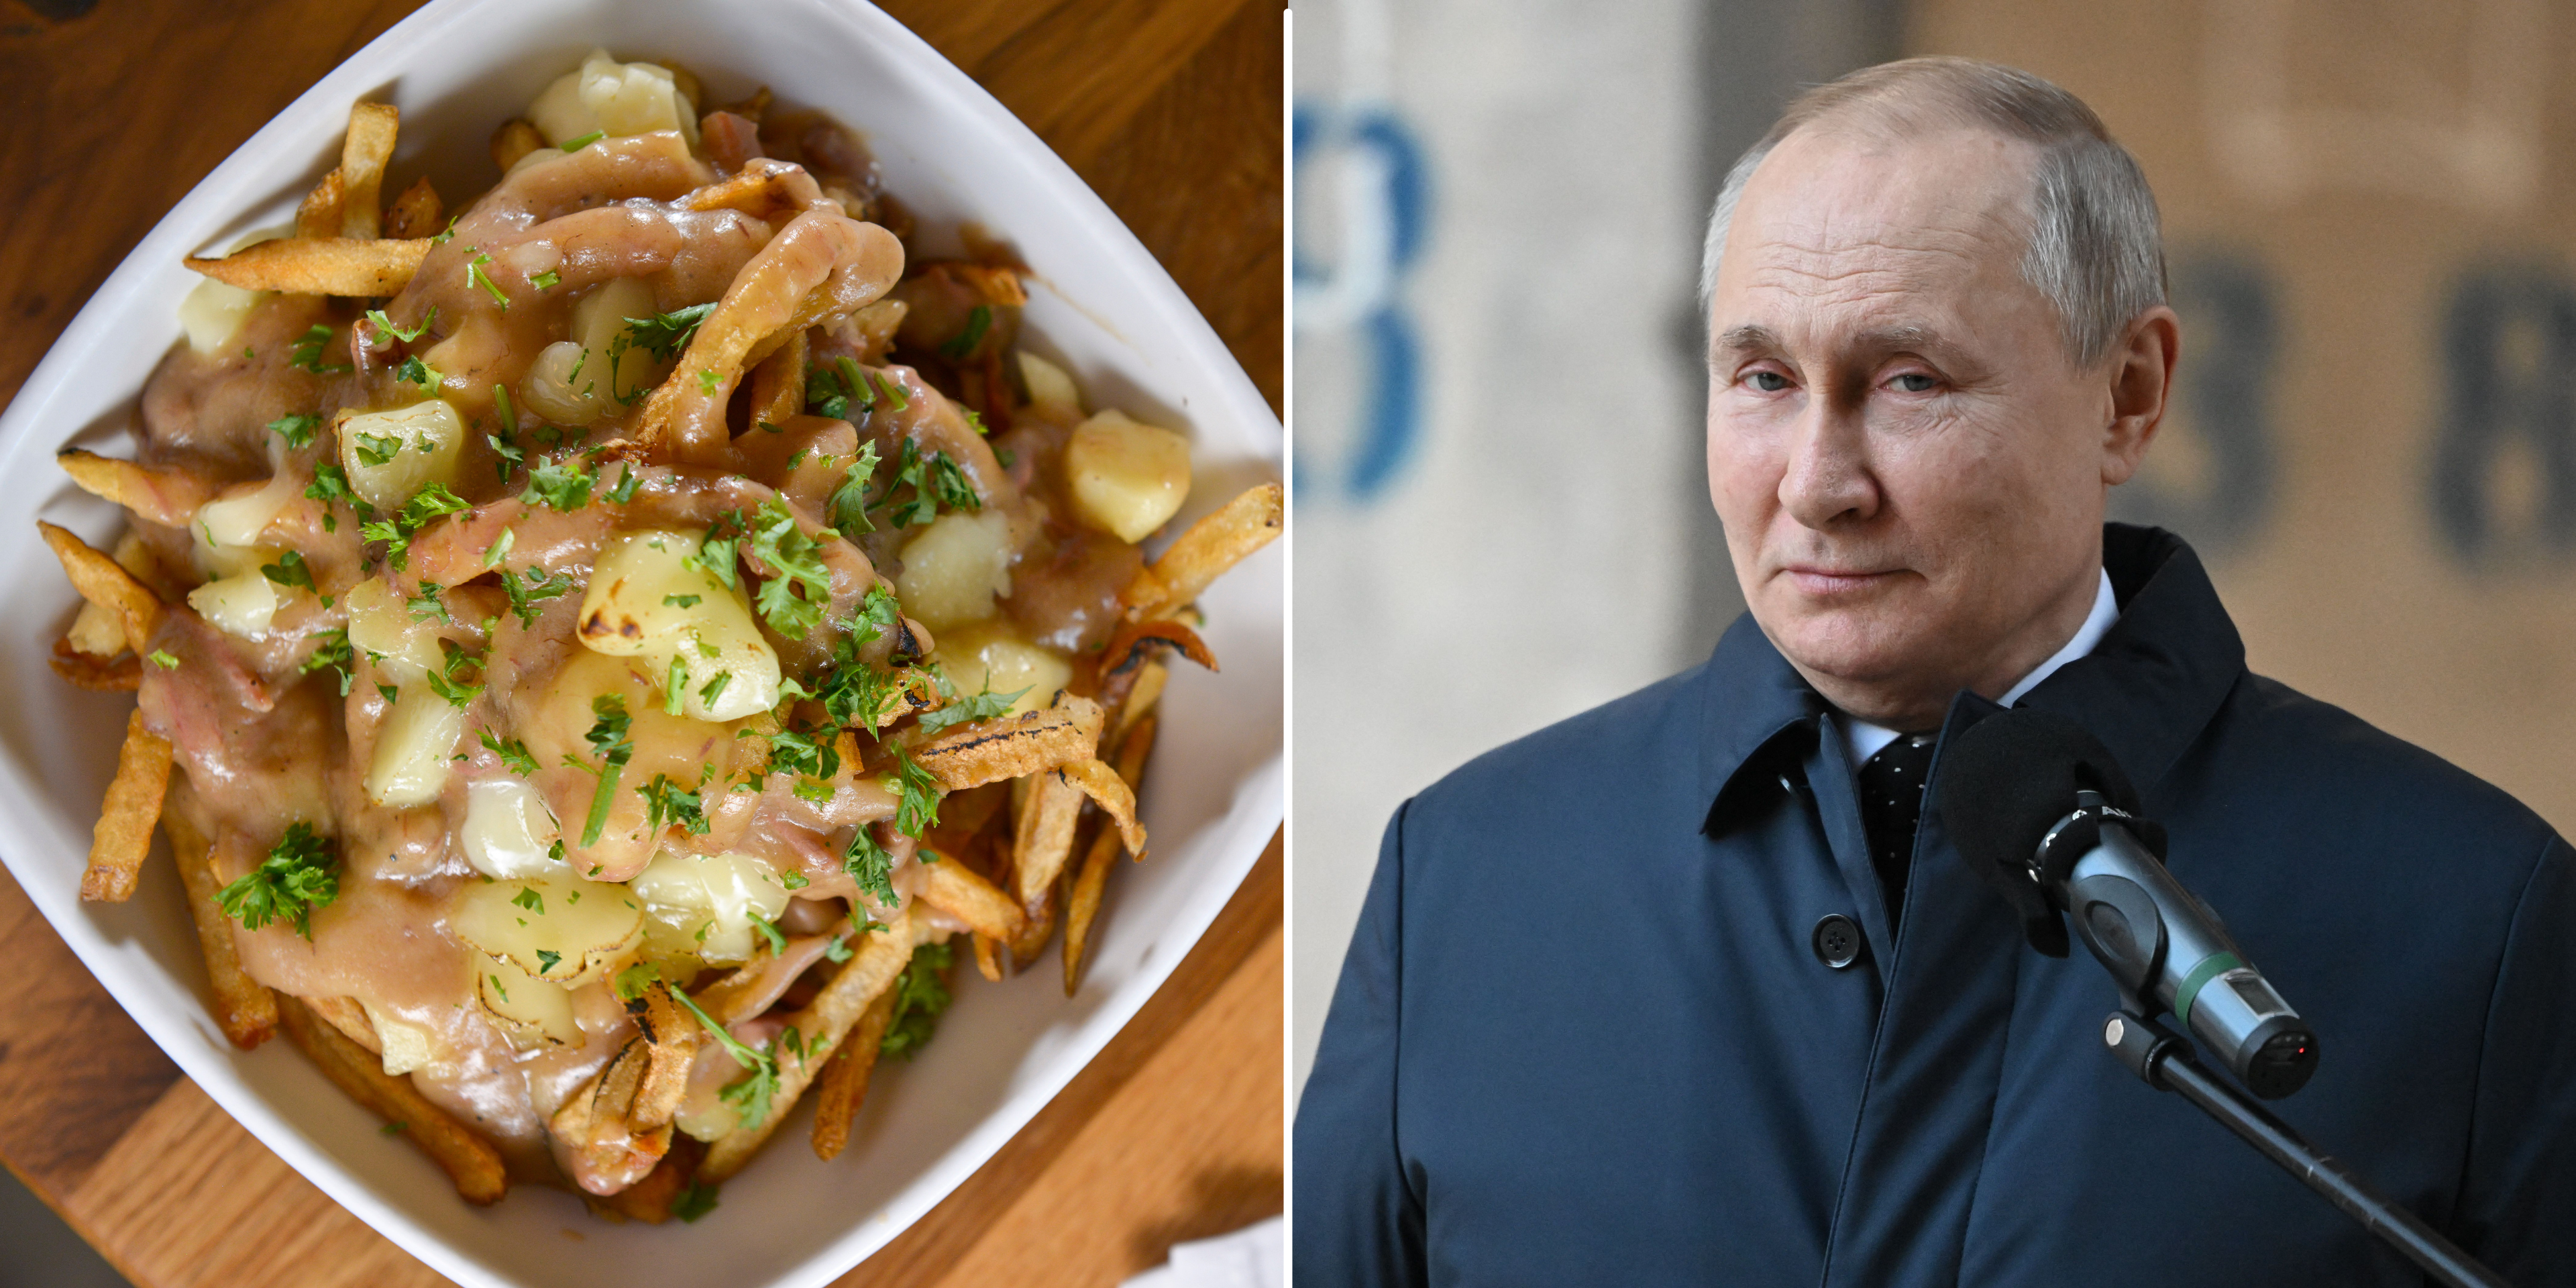 Left: Short rib poutine, Right: Russian President Vladimir Putin